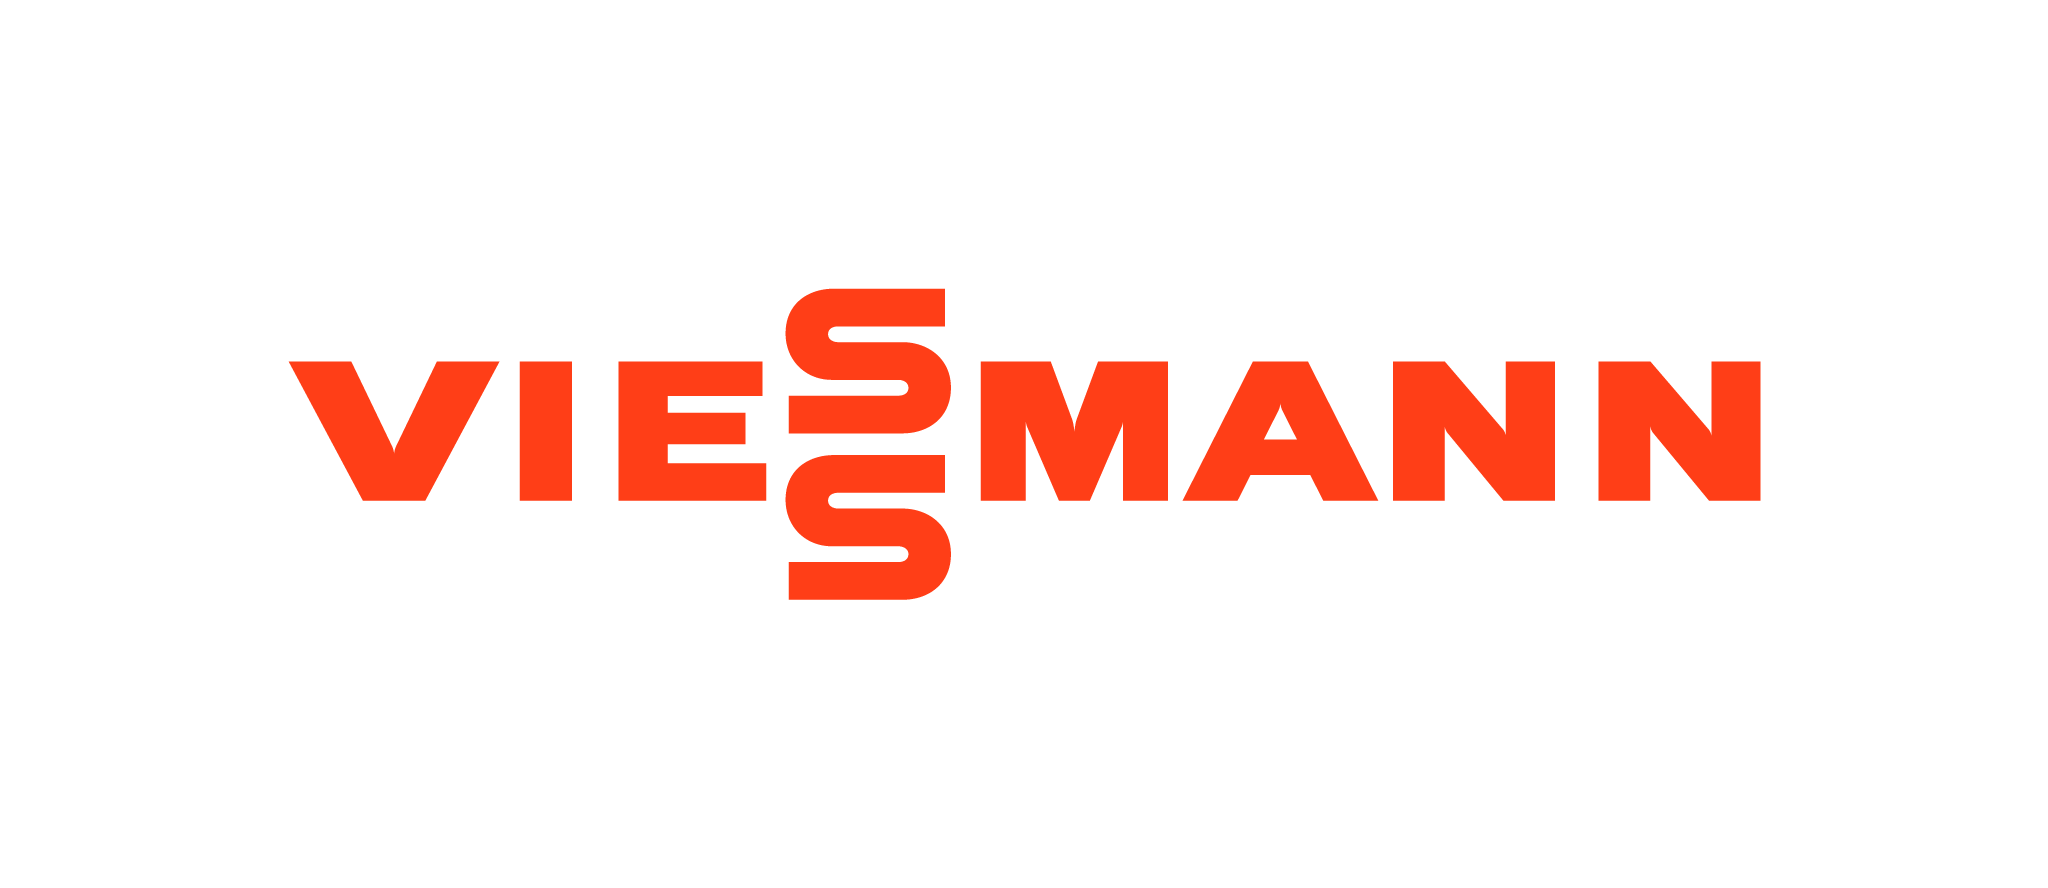 Viessmann Graphics and Logos | Viessmann US